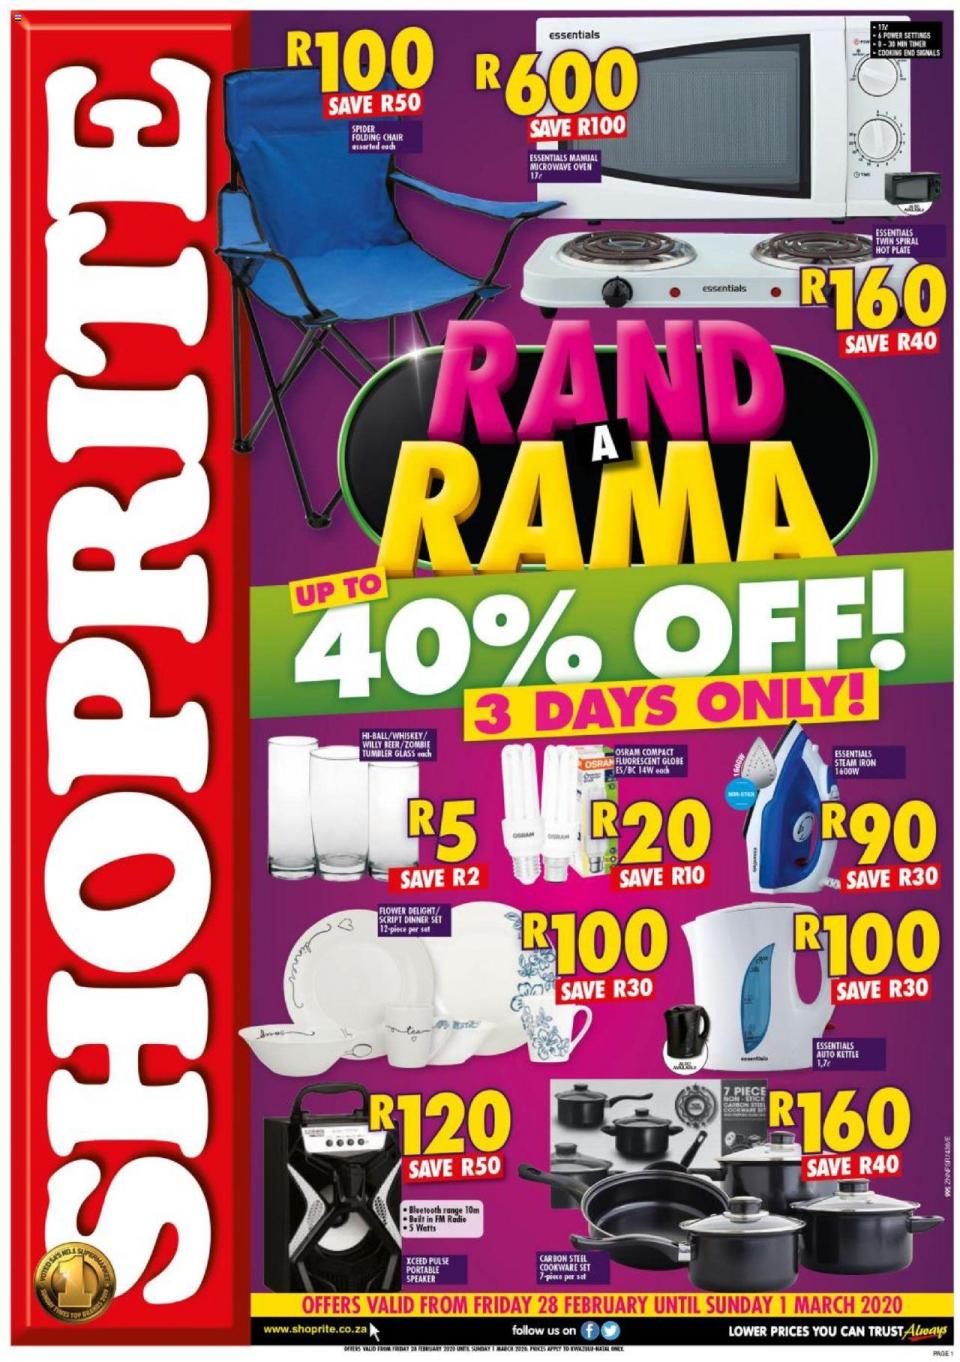 Shoprite Specials Rand A Rama Promotion 28 February 2020